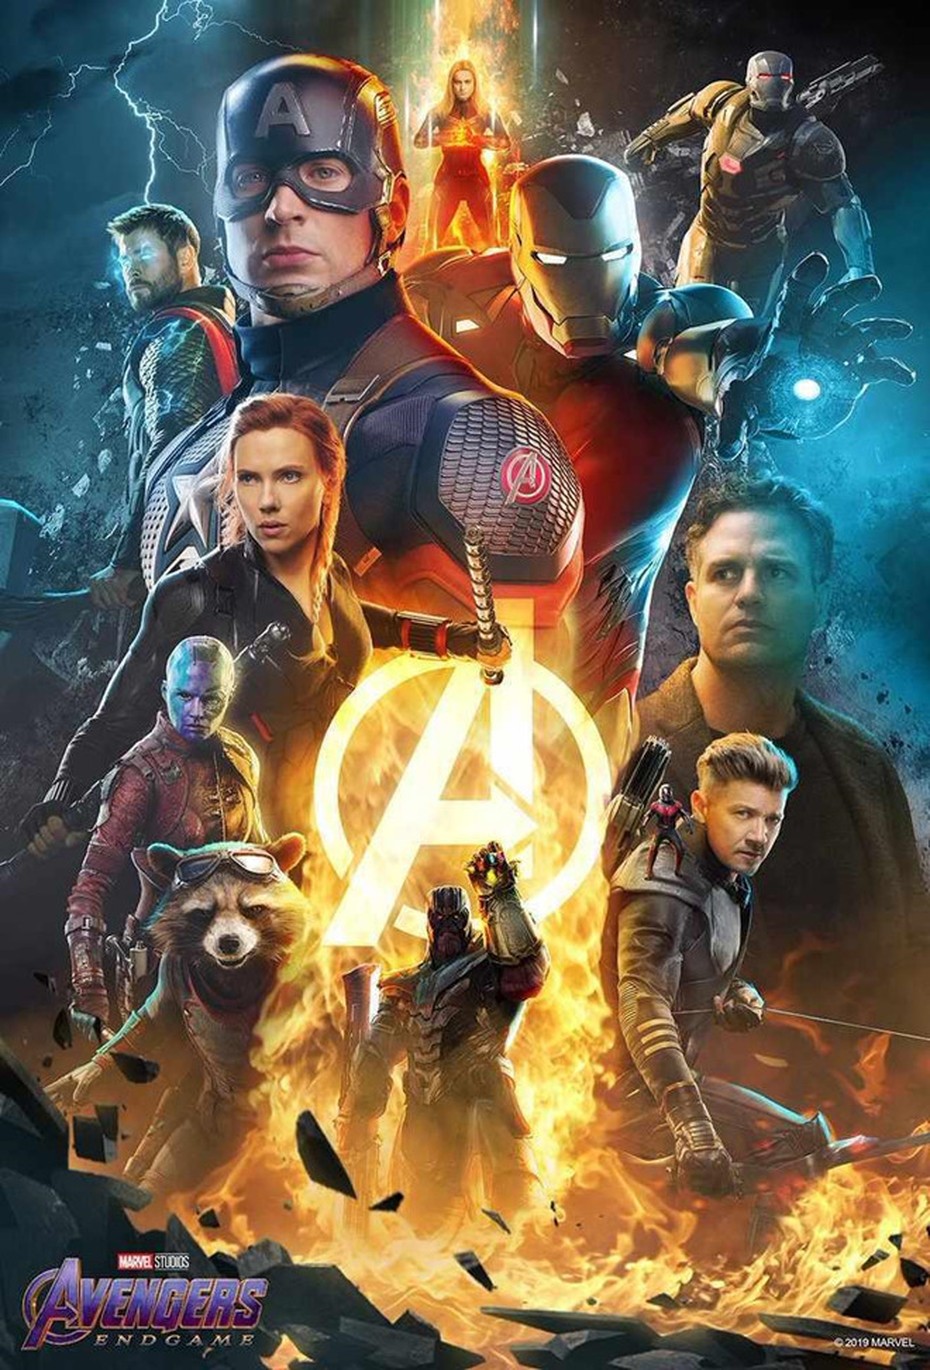 ‘Avengers: Endgame’ phá kỷ lục doanh thu tại Việt Nam chỉ sau 1 tuần